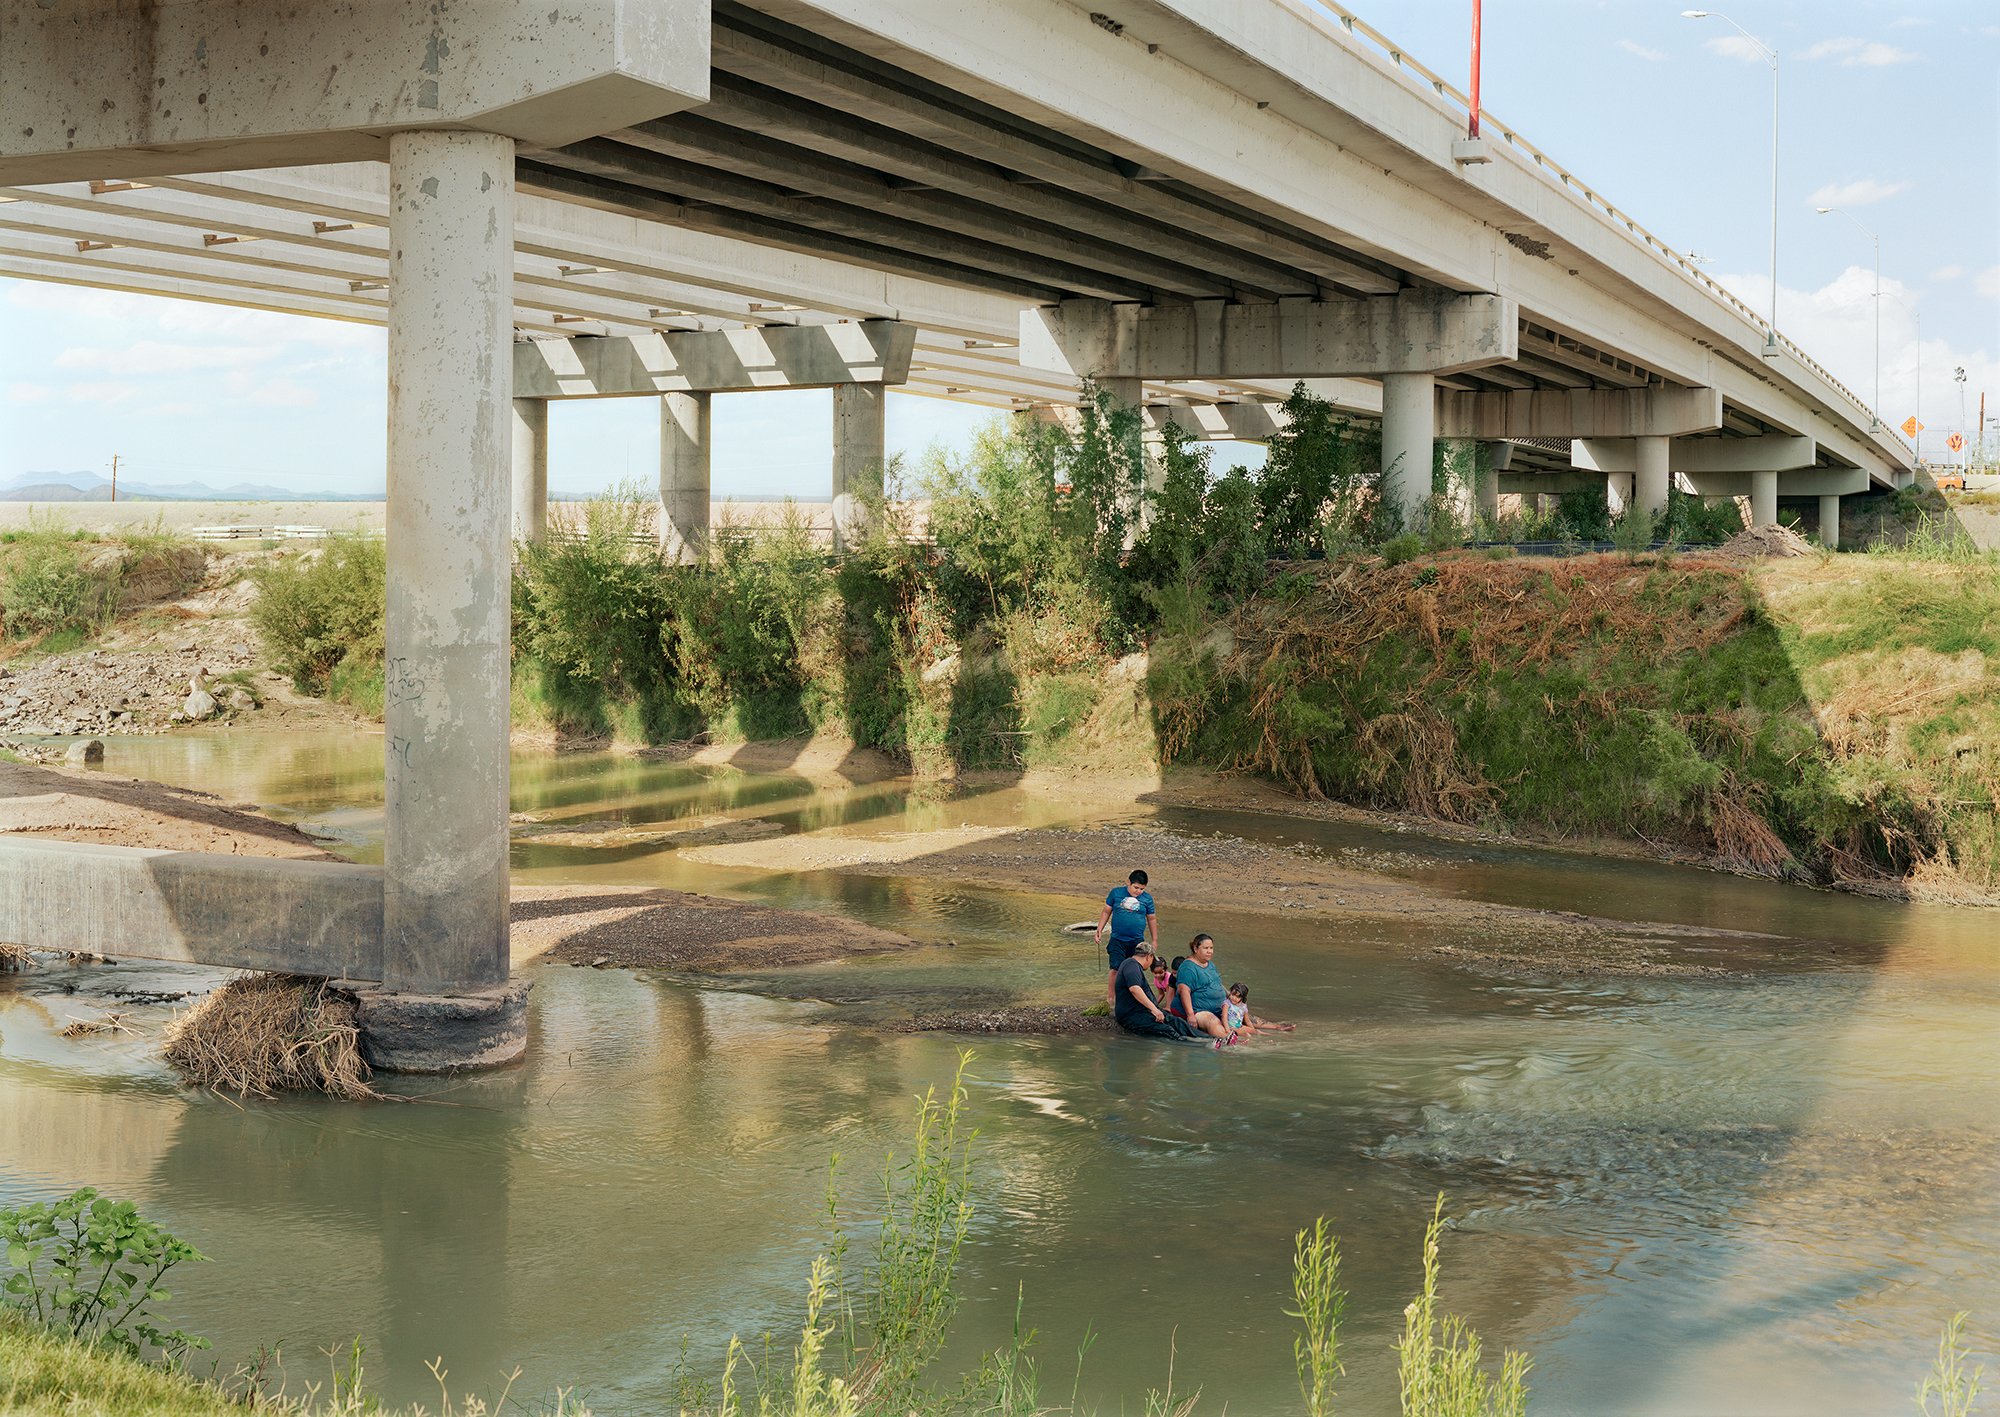 Family under the, Presidio-Ojinaga International Bridge, Texas-Mexico border, 2019